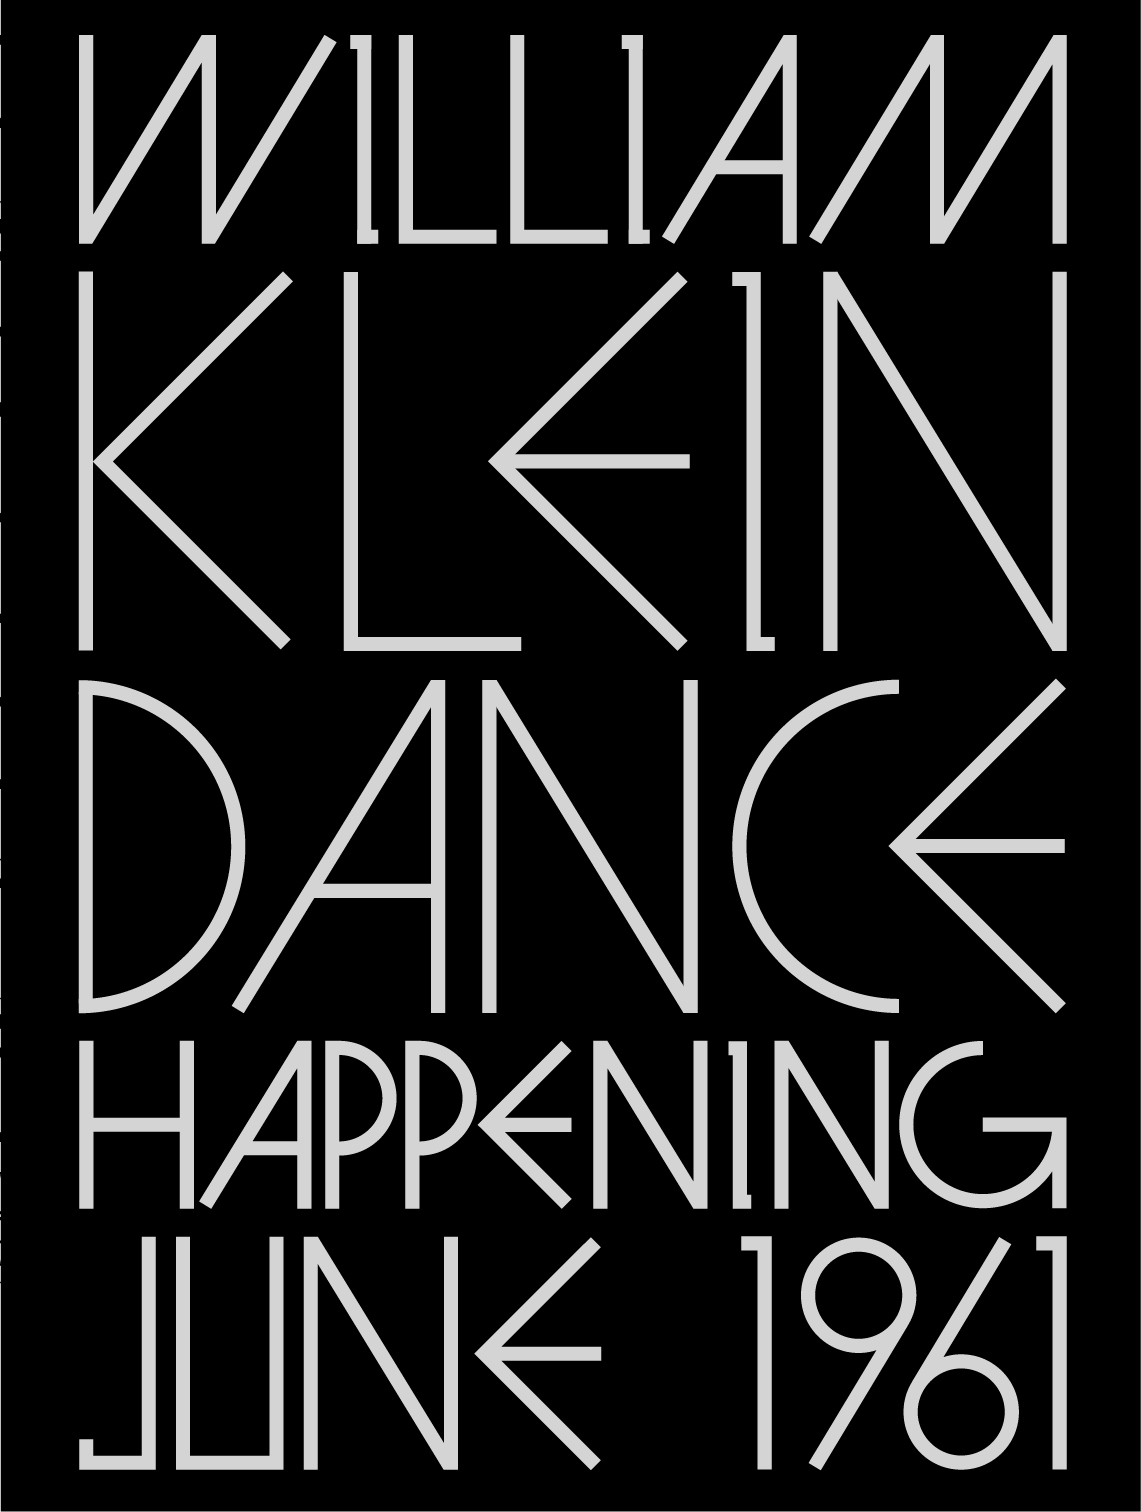 William Klein “Dance Happening June 1961”